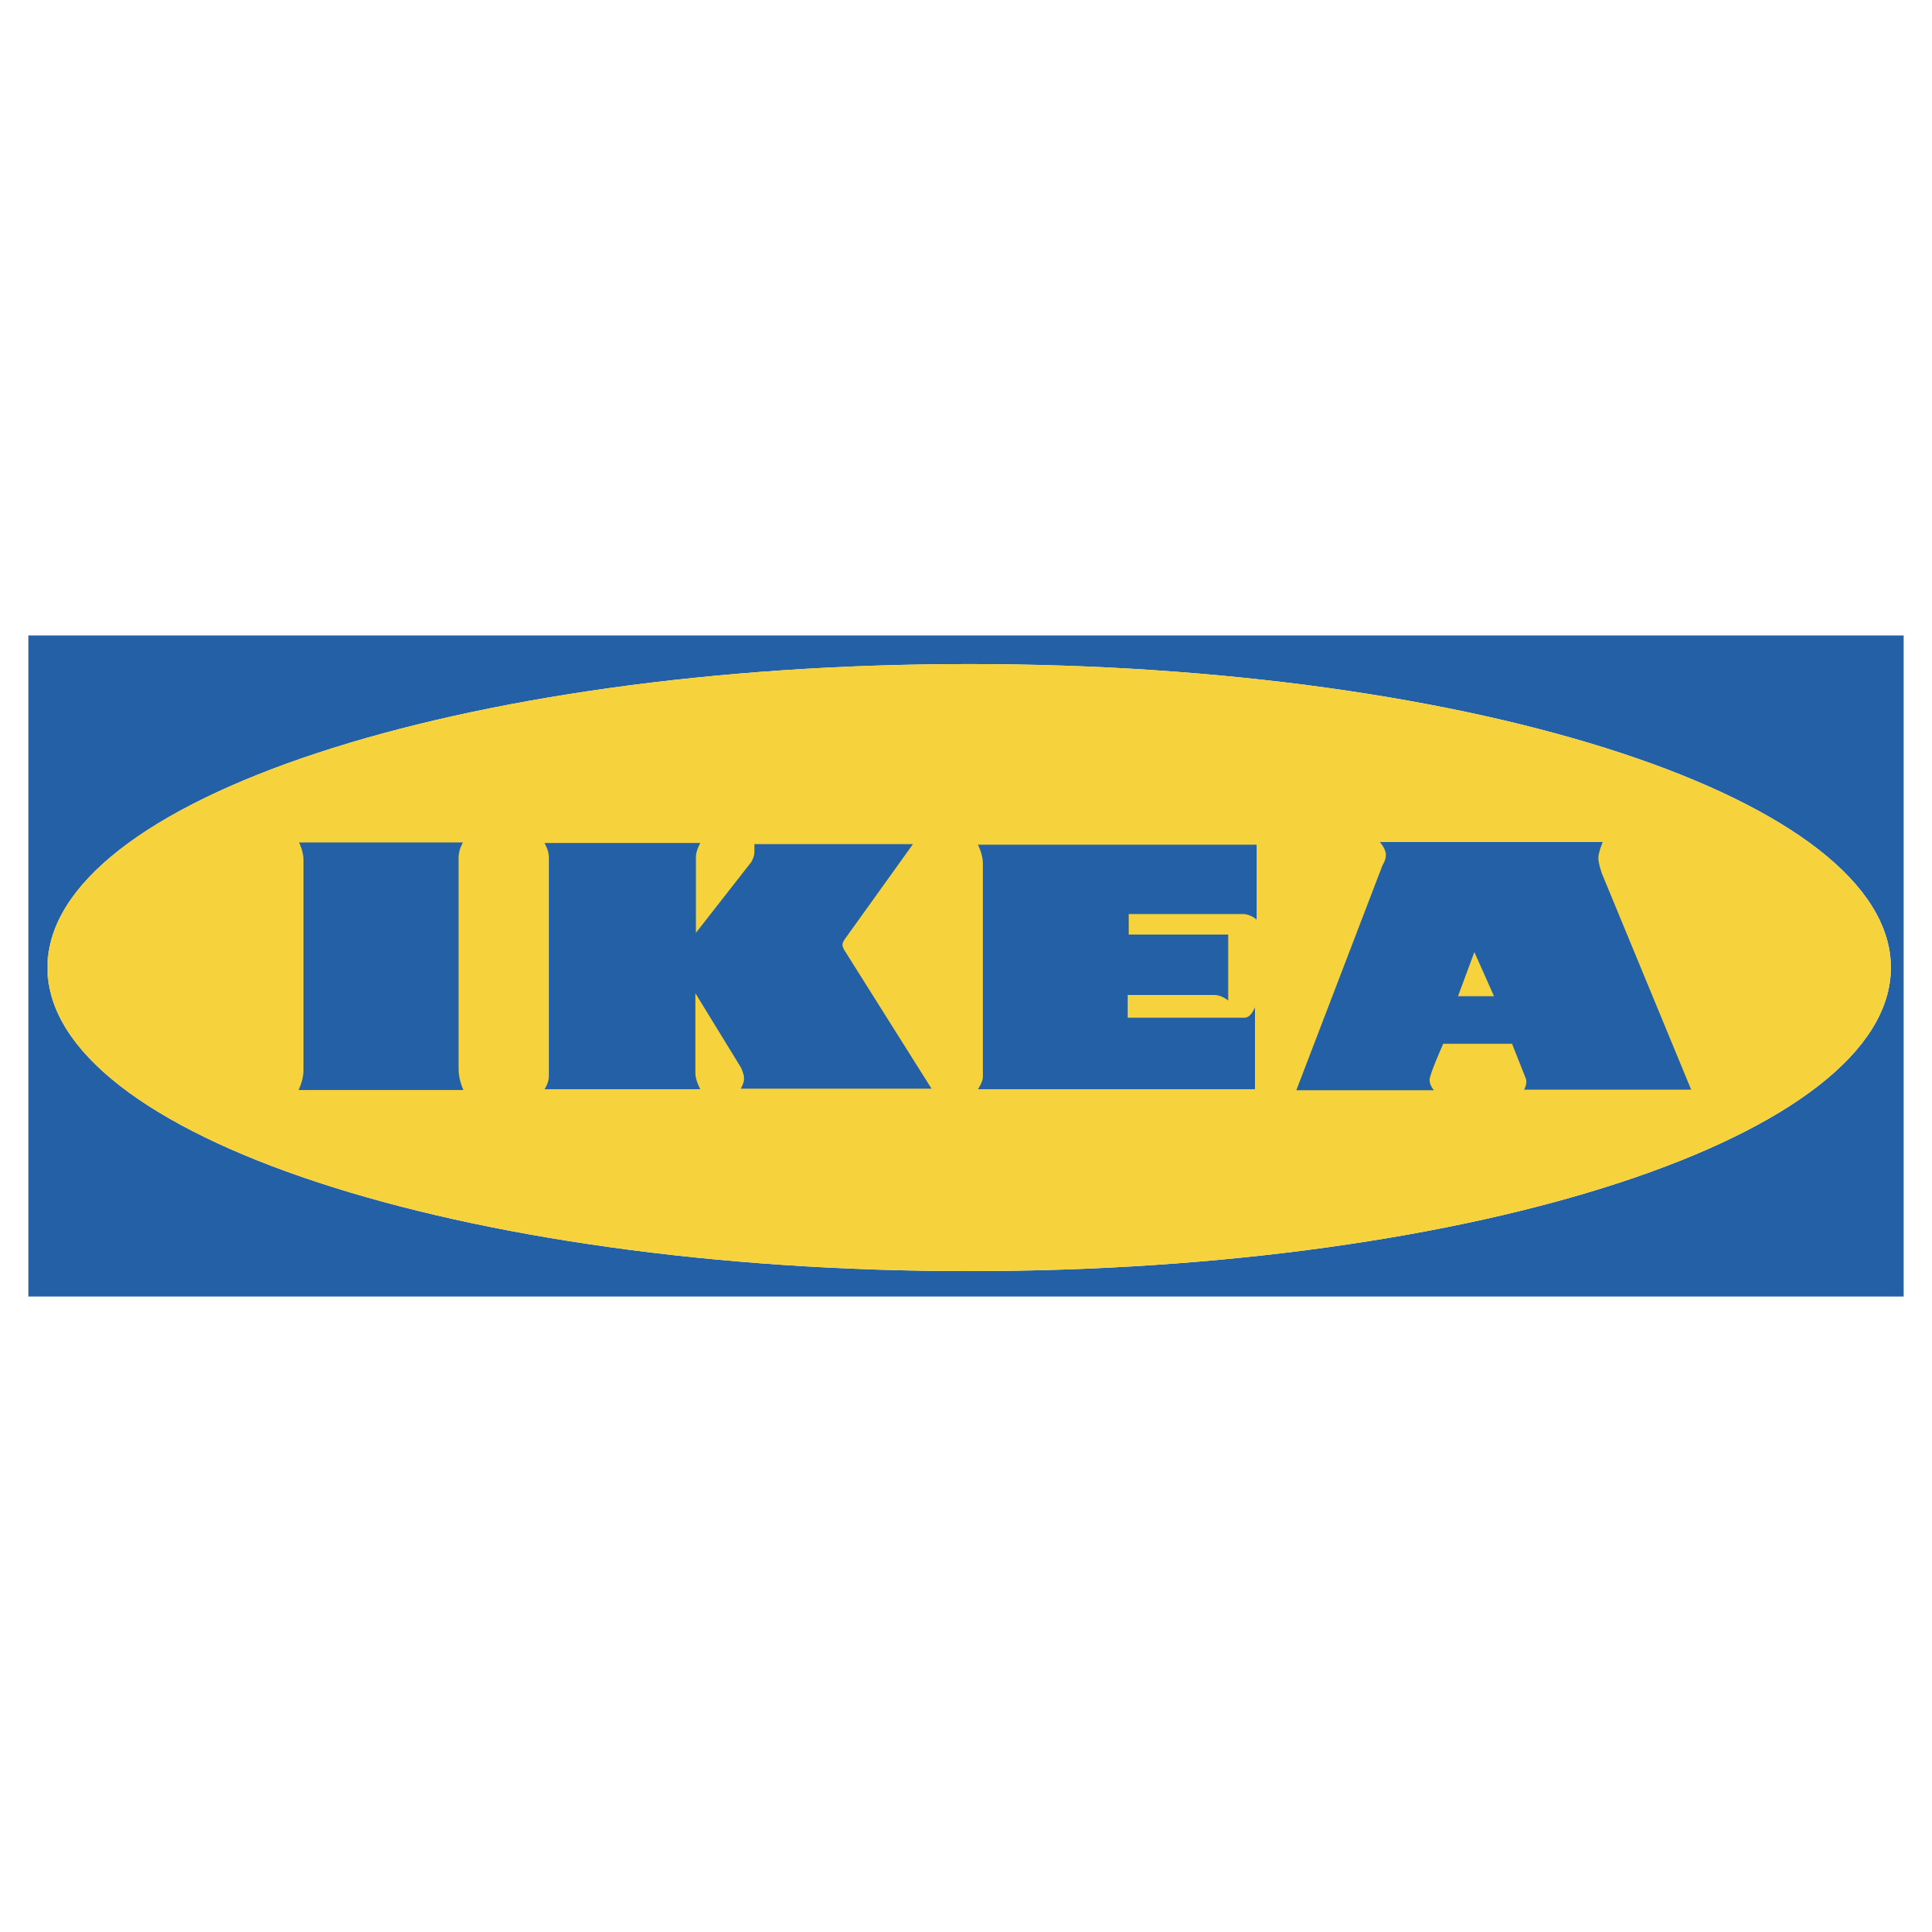 Ikea Icon - Free Download, Pn